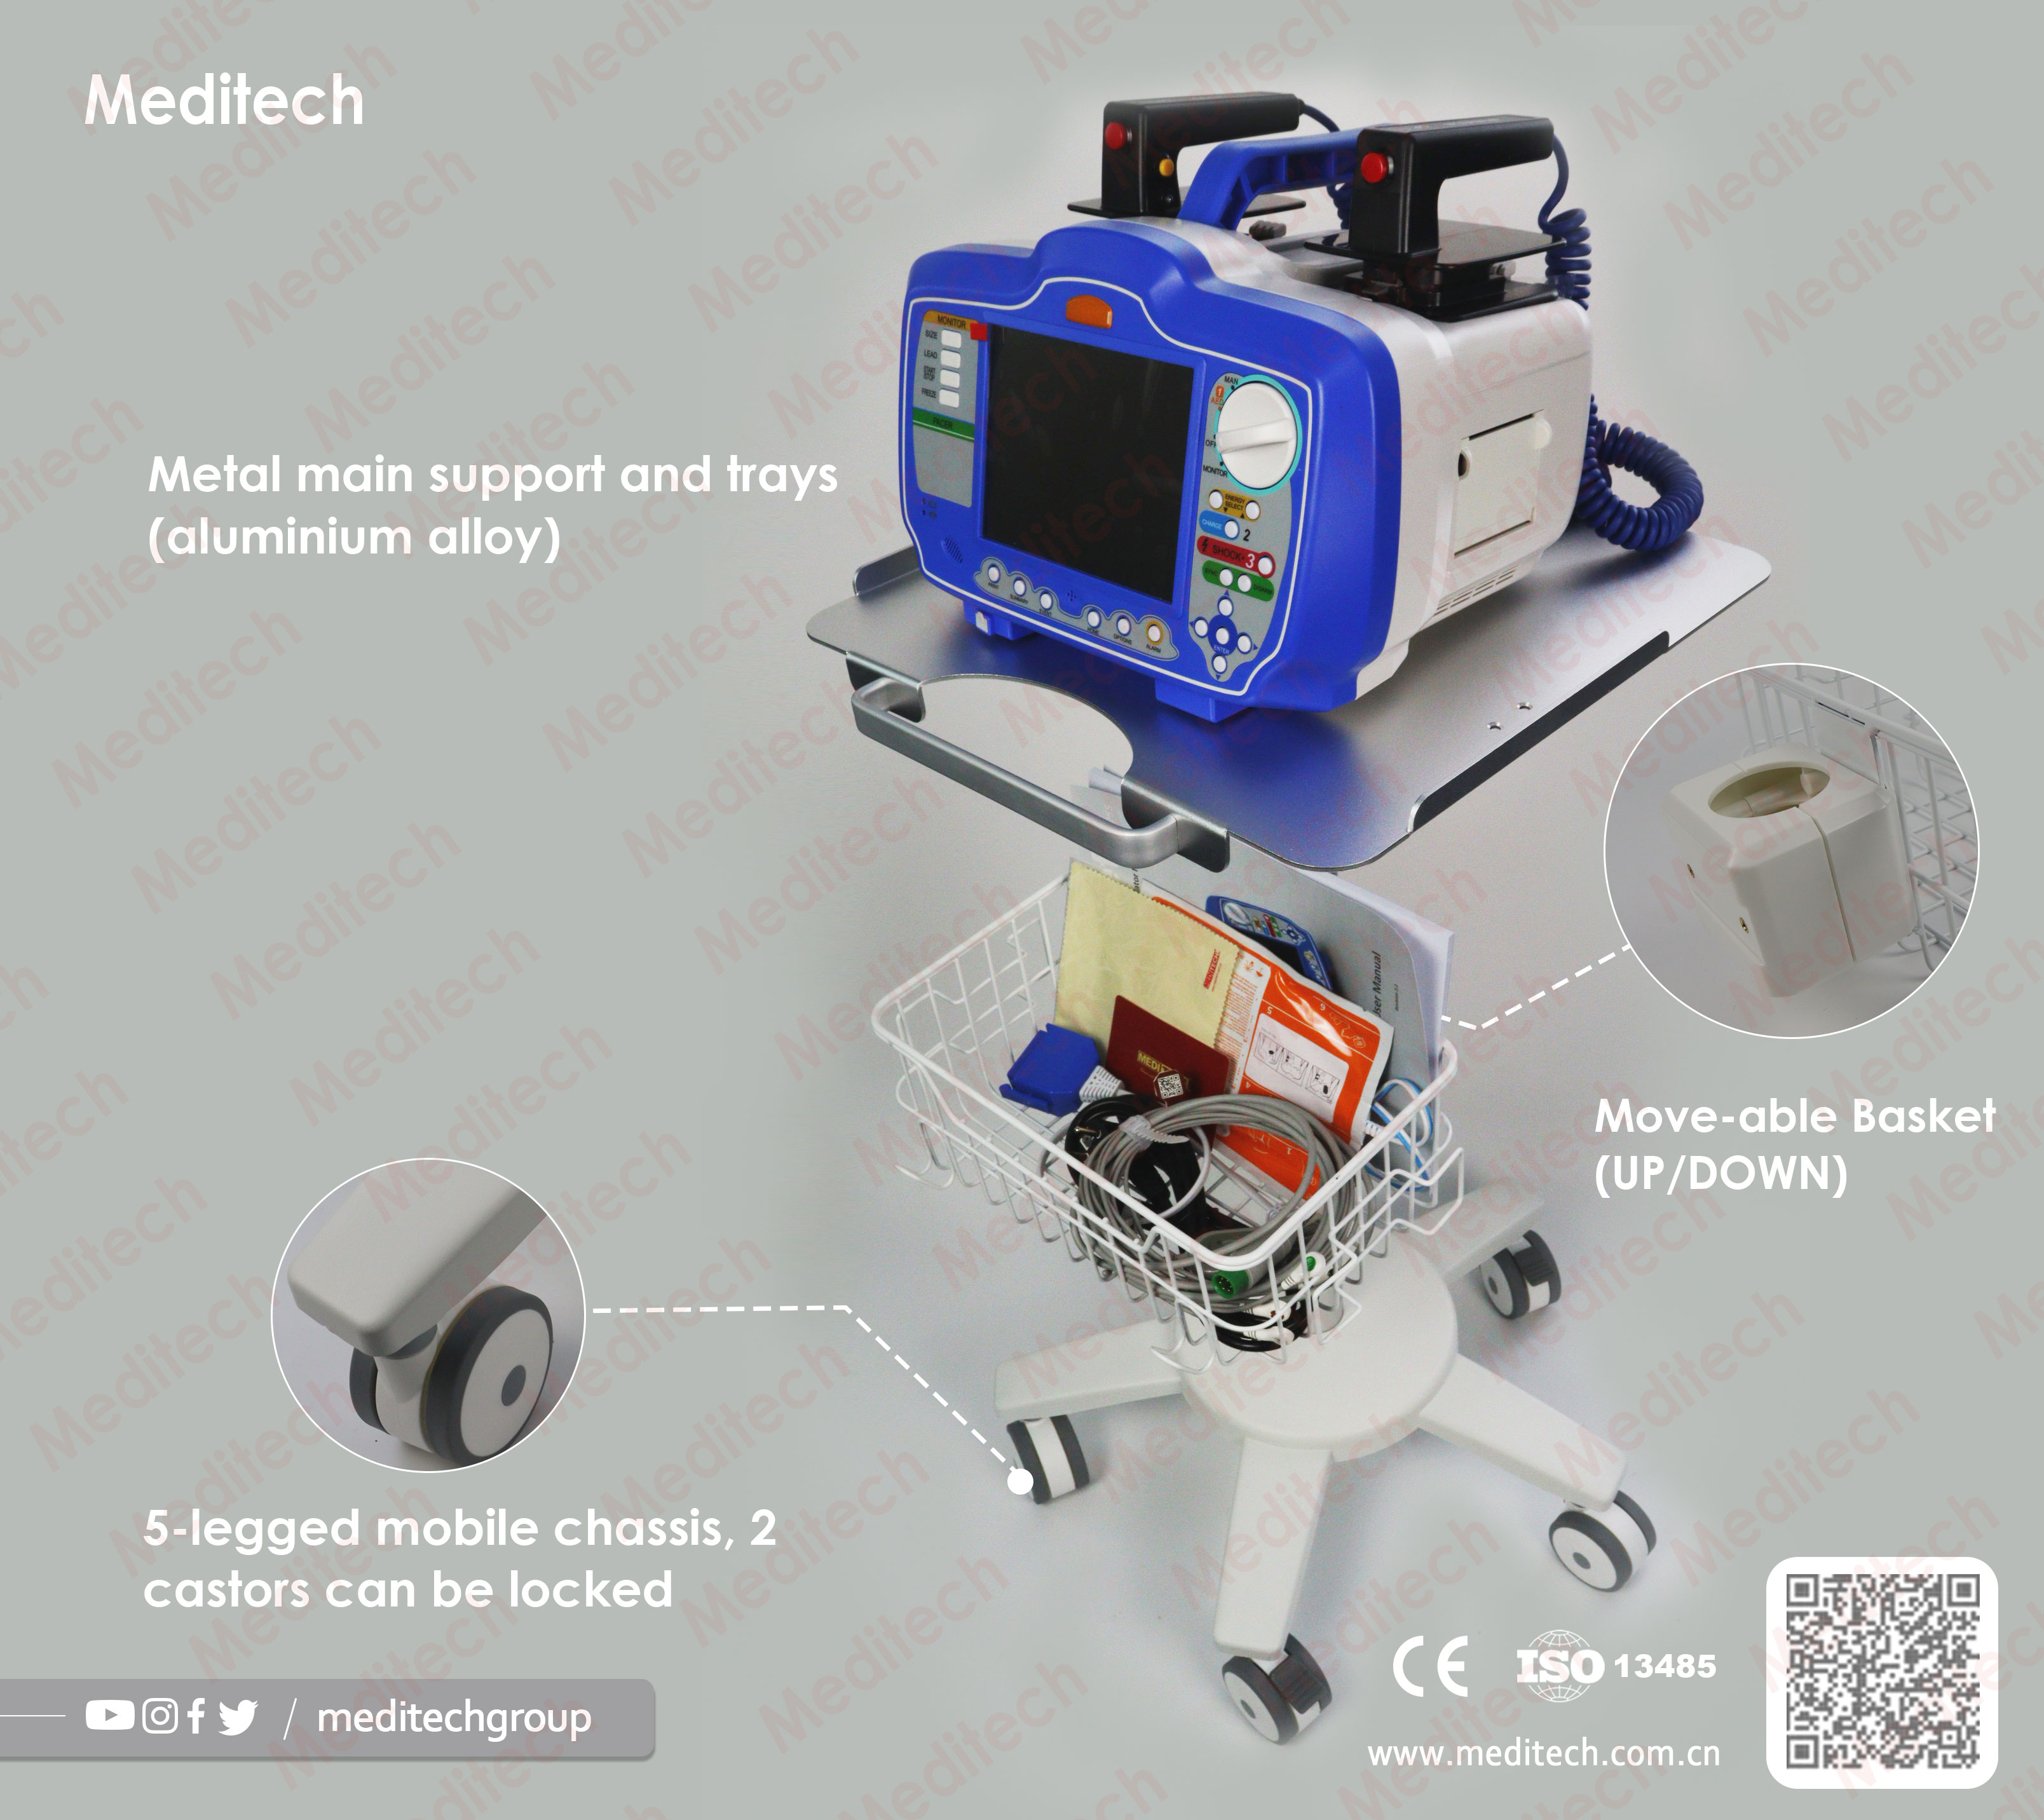 Mobile trolley for the Meditech Defibrillator monitors